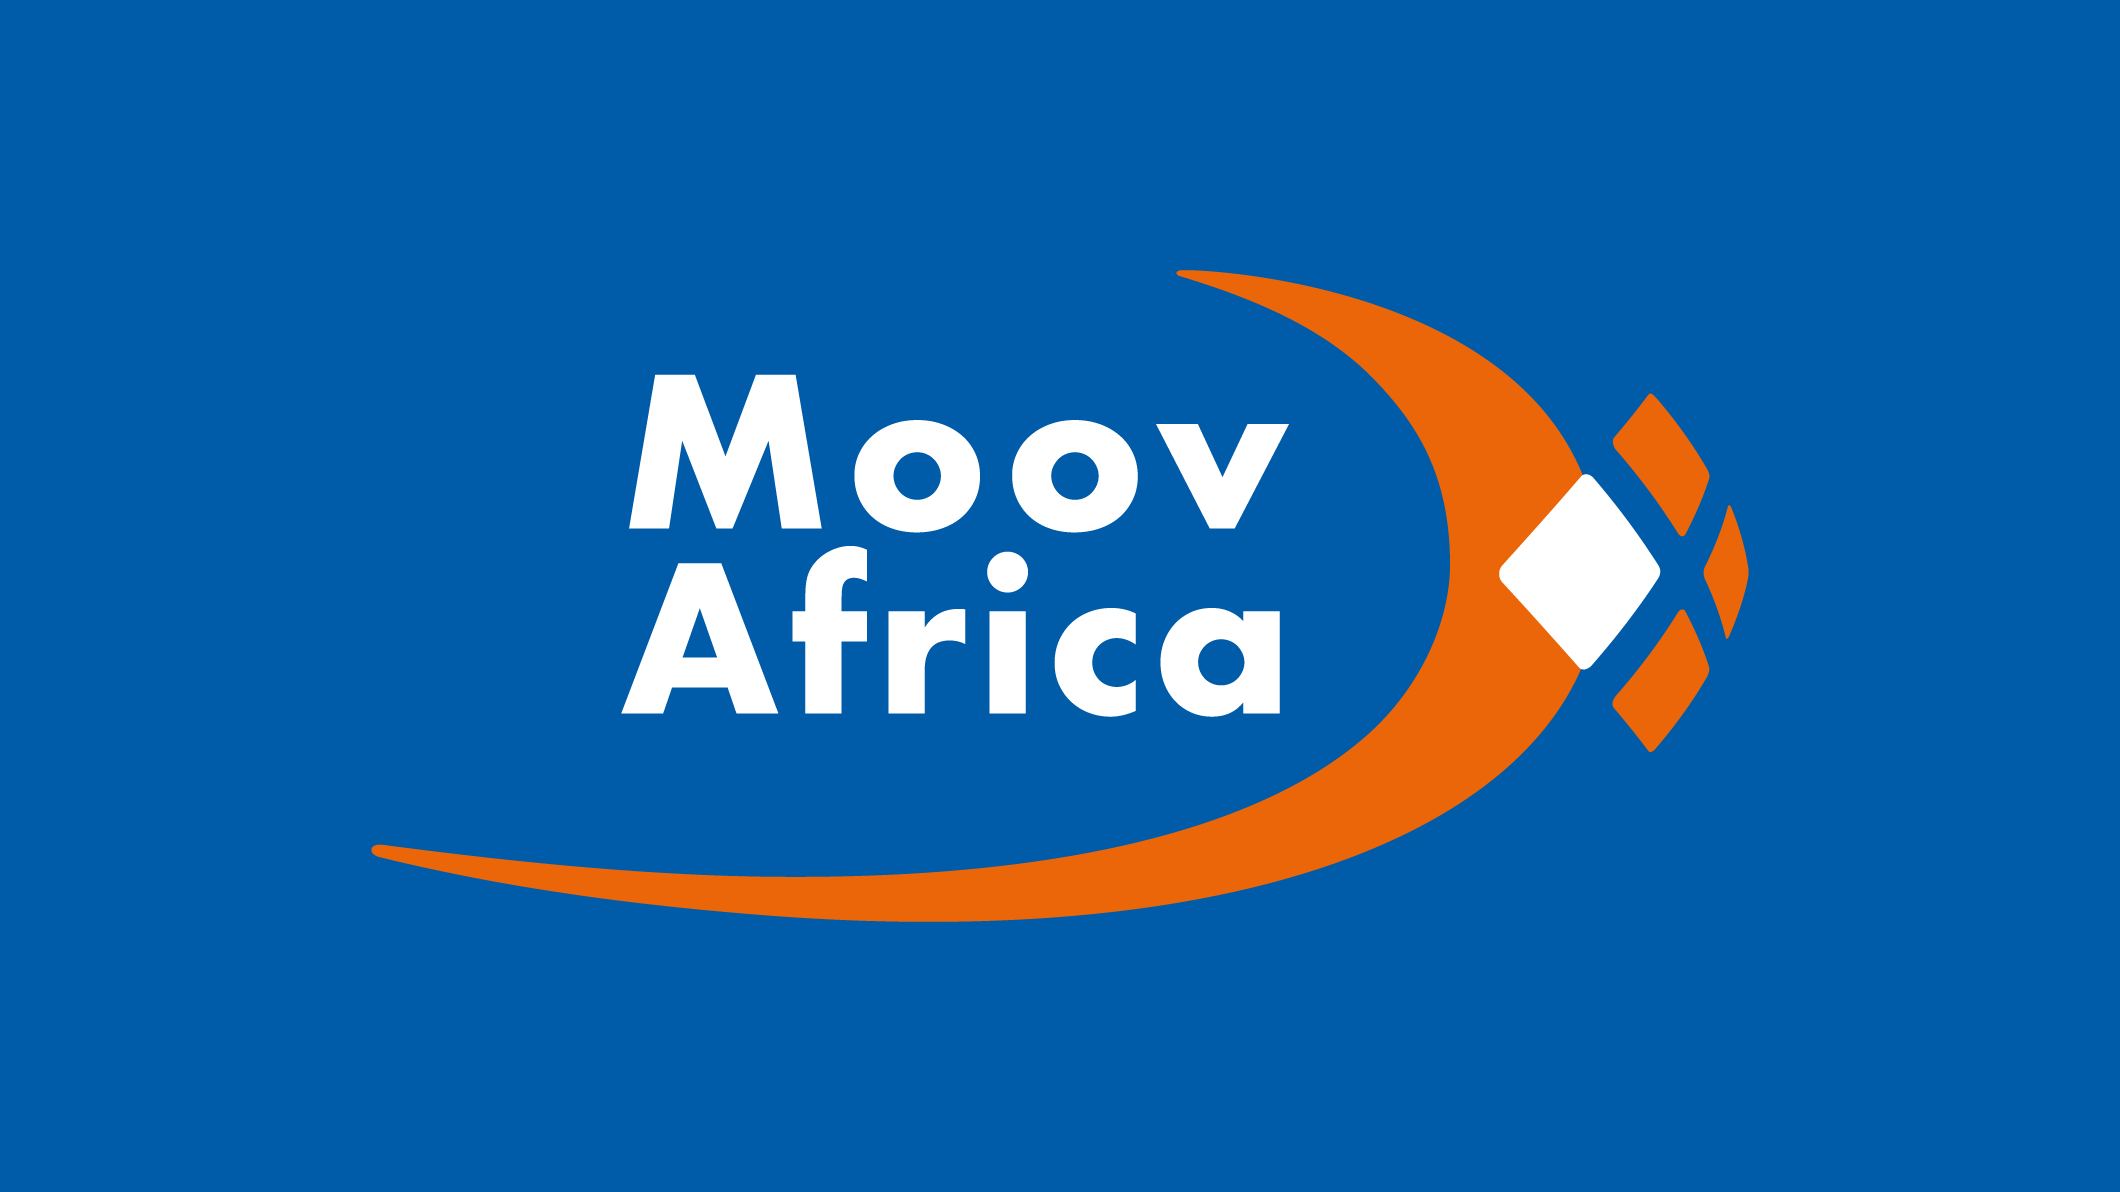 Moov Africa CI